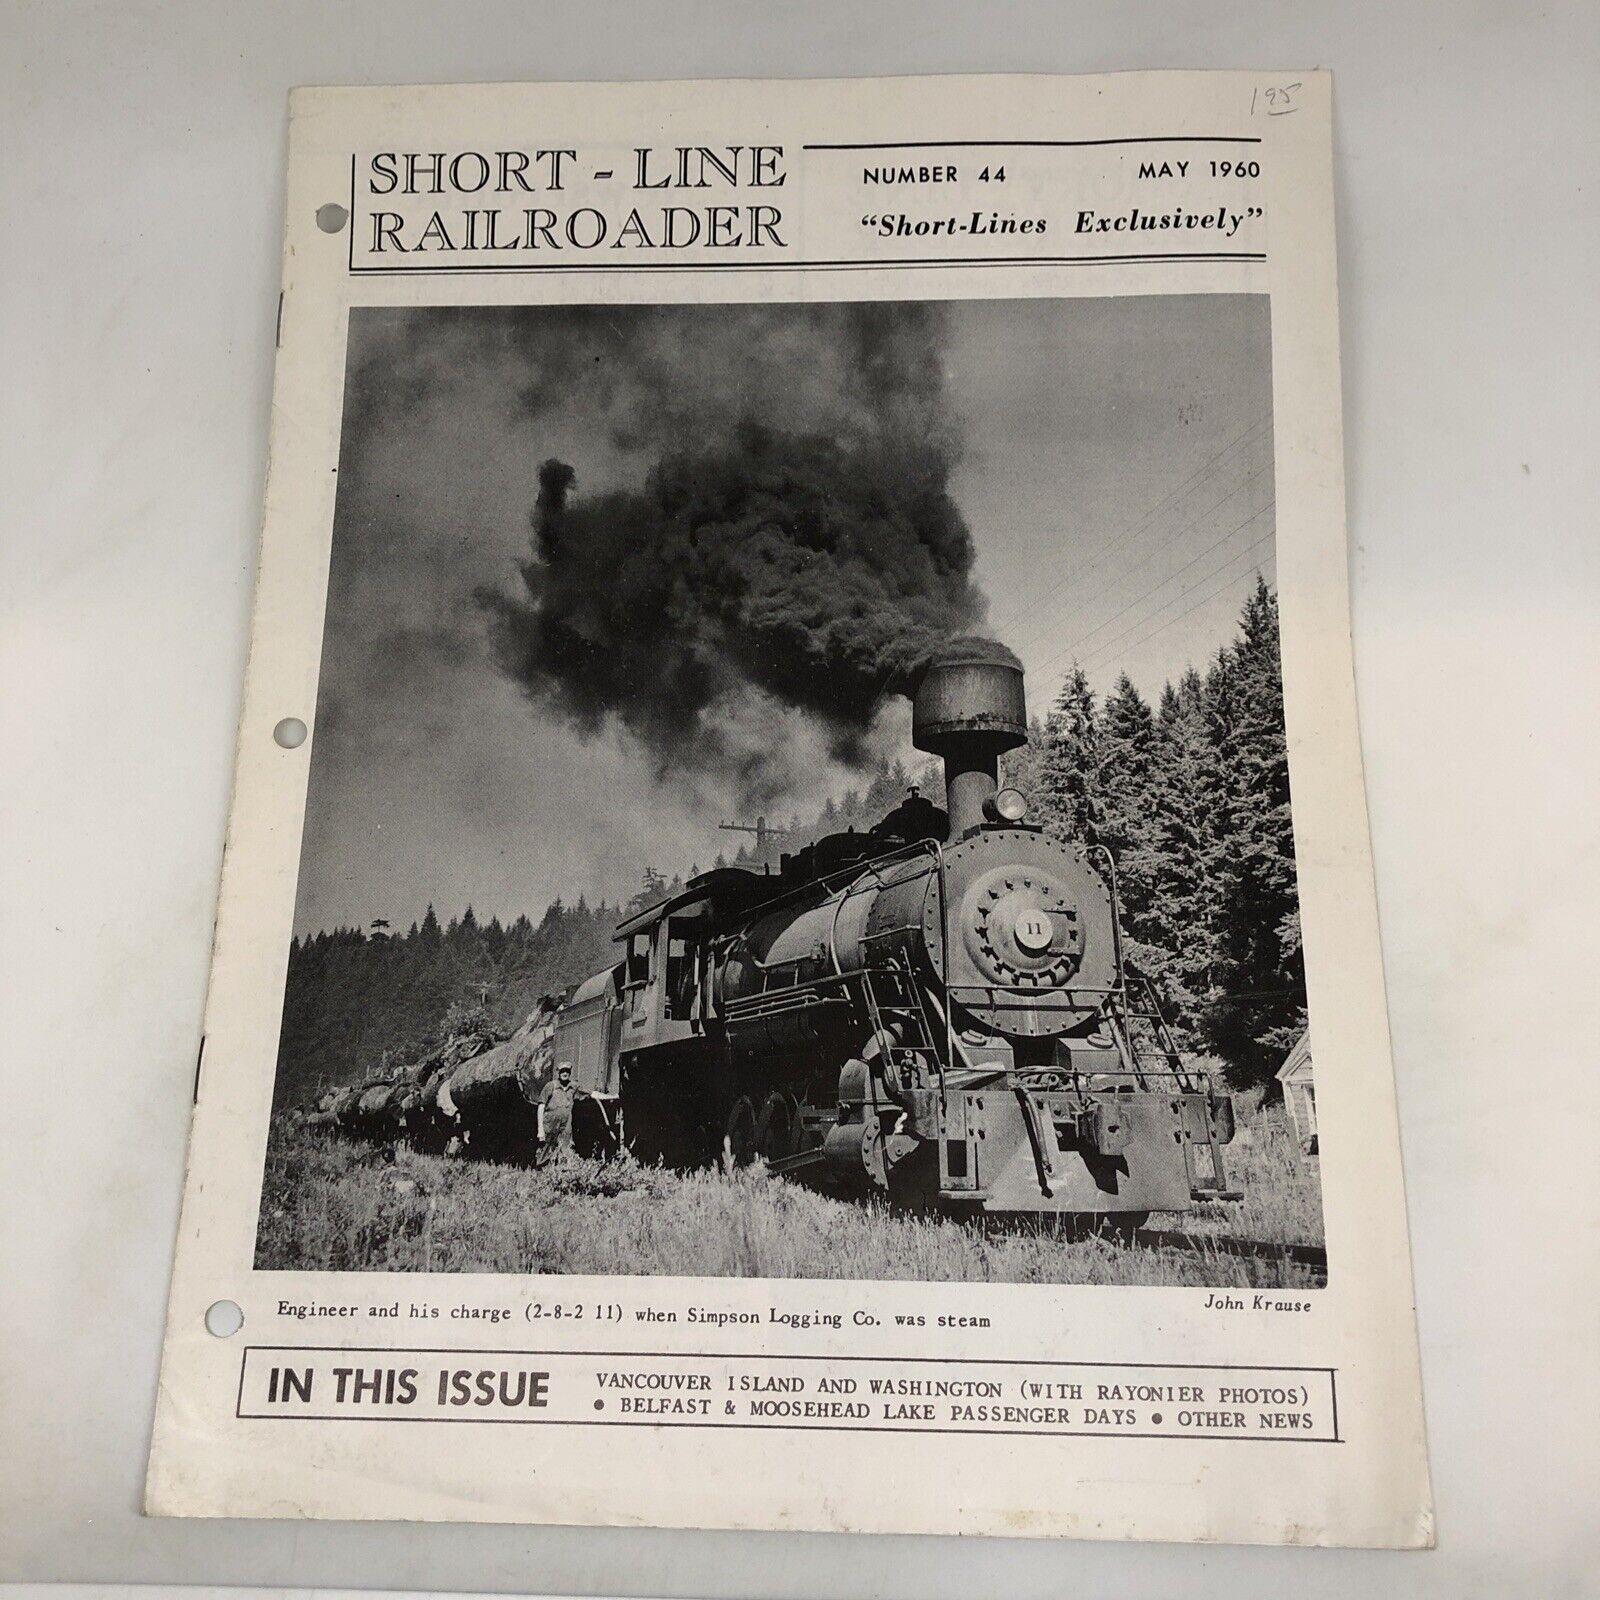 Short-Line Railroader Magazine Number 44, May 1960